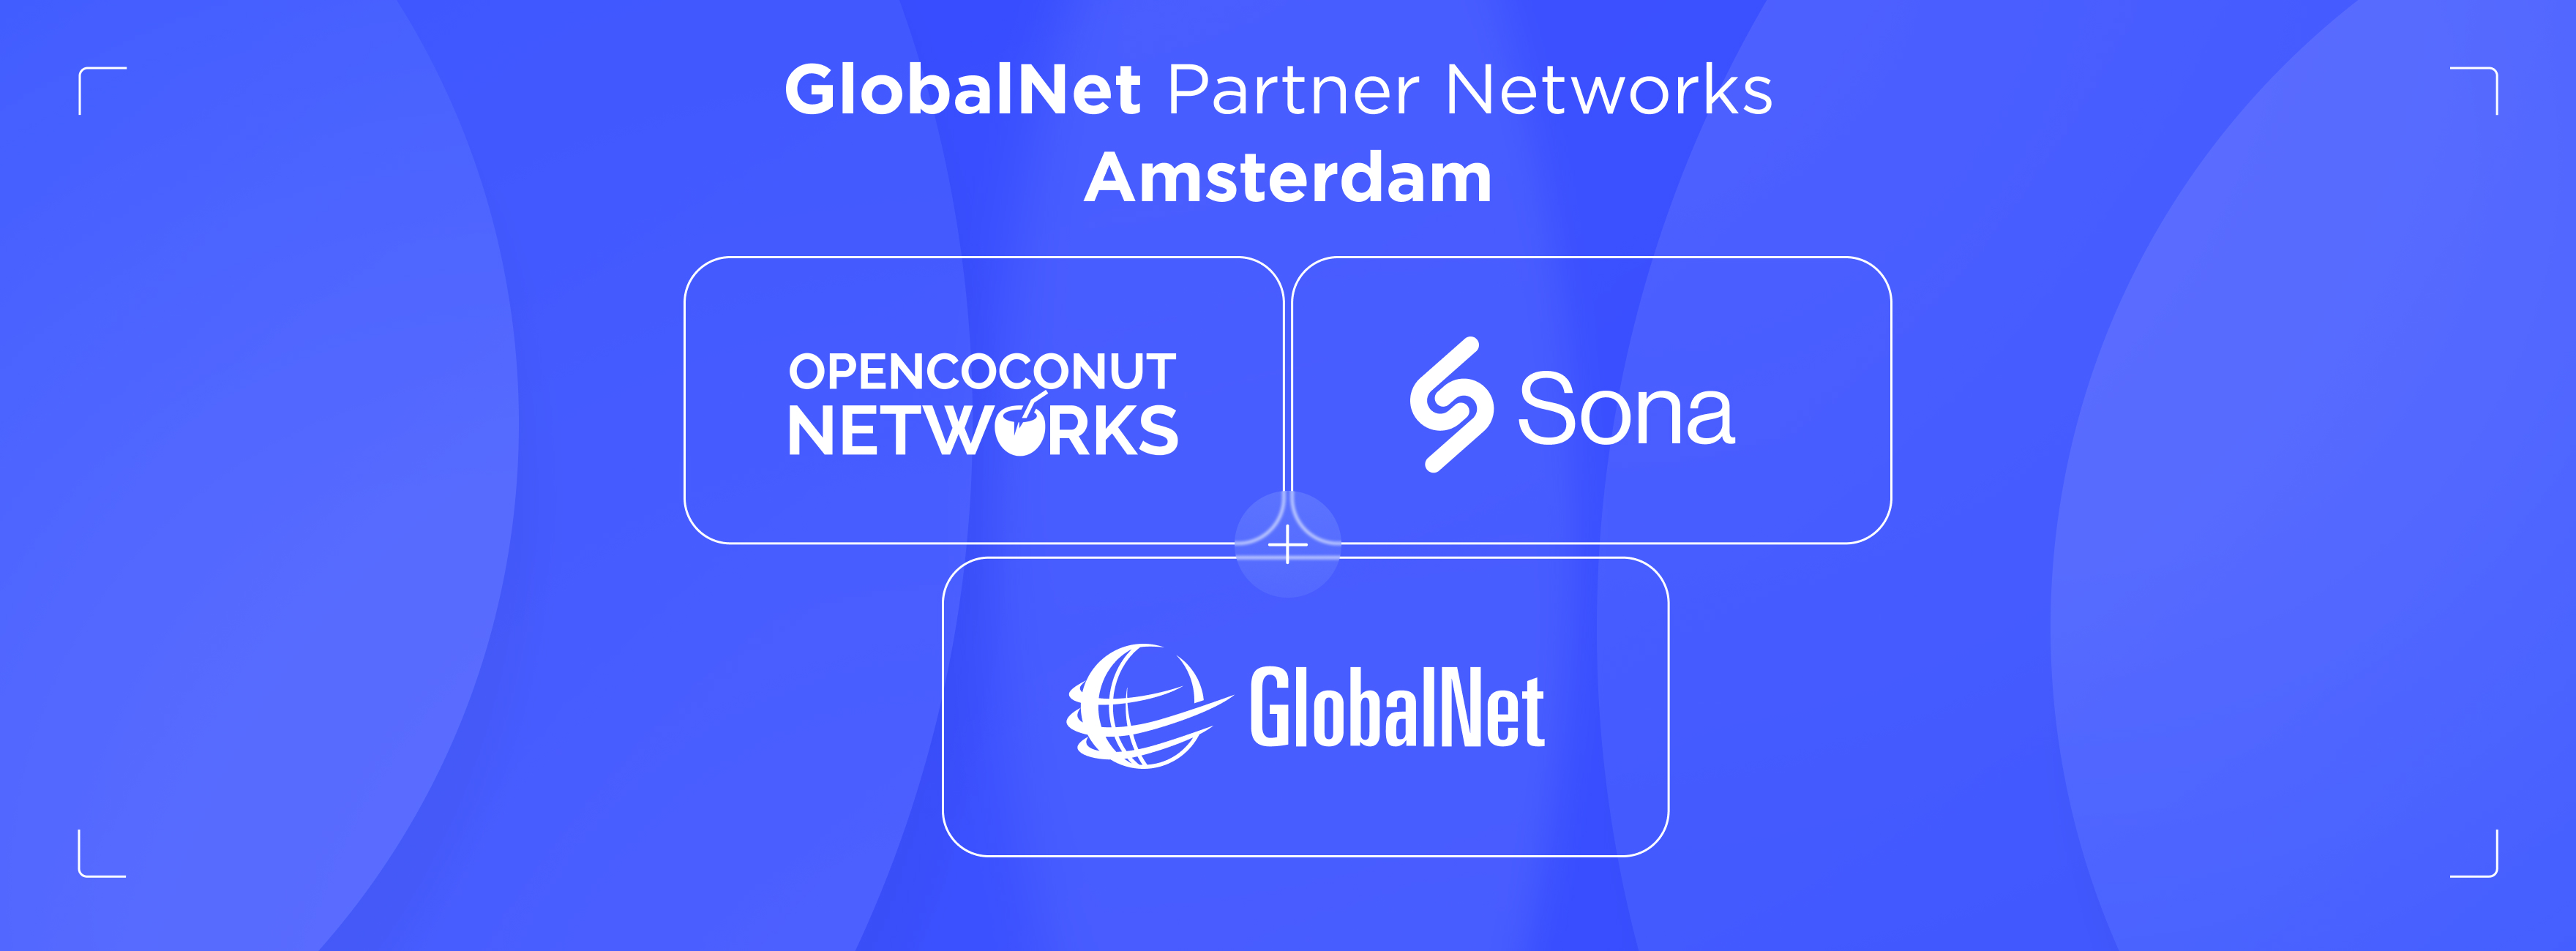 GlobalNet Partner Networks in Amsterdam: OpenCoconut and SonaBusiness